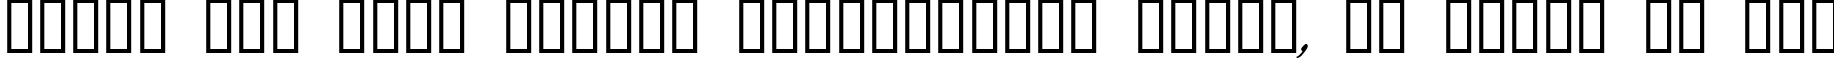 Пример написания шрифтом Blue Mutant Double Serif текста на русском